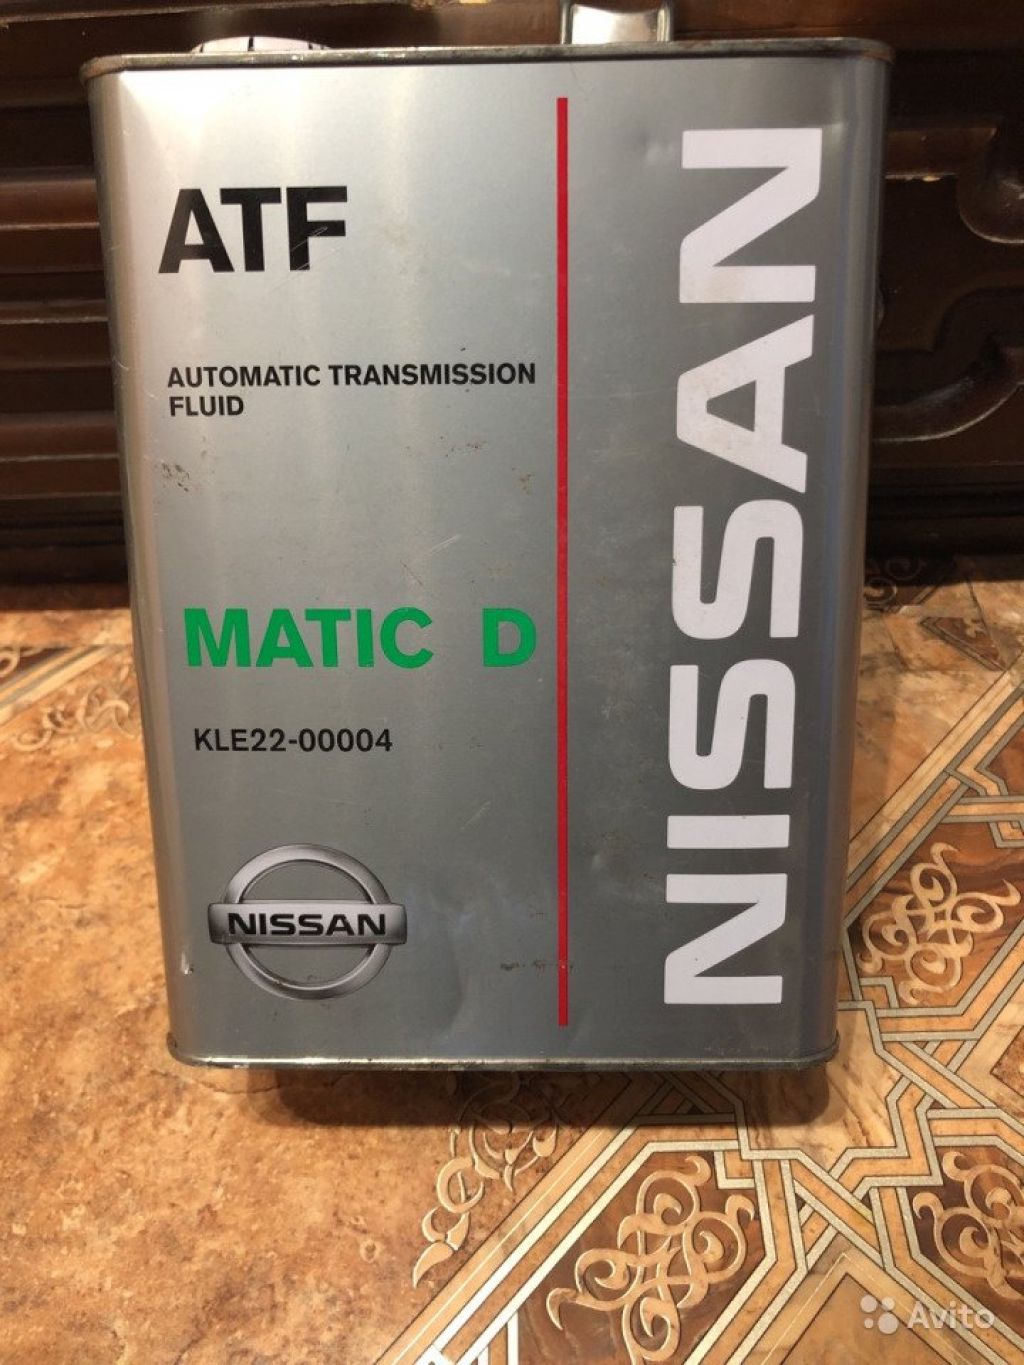 Nissan matic d atf. Nissan ATF matic d (артикул 4л — kle22-00004). Nissan ATF matic d. Nissan kle22-00004. Nissan matic d ATF артикул.